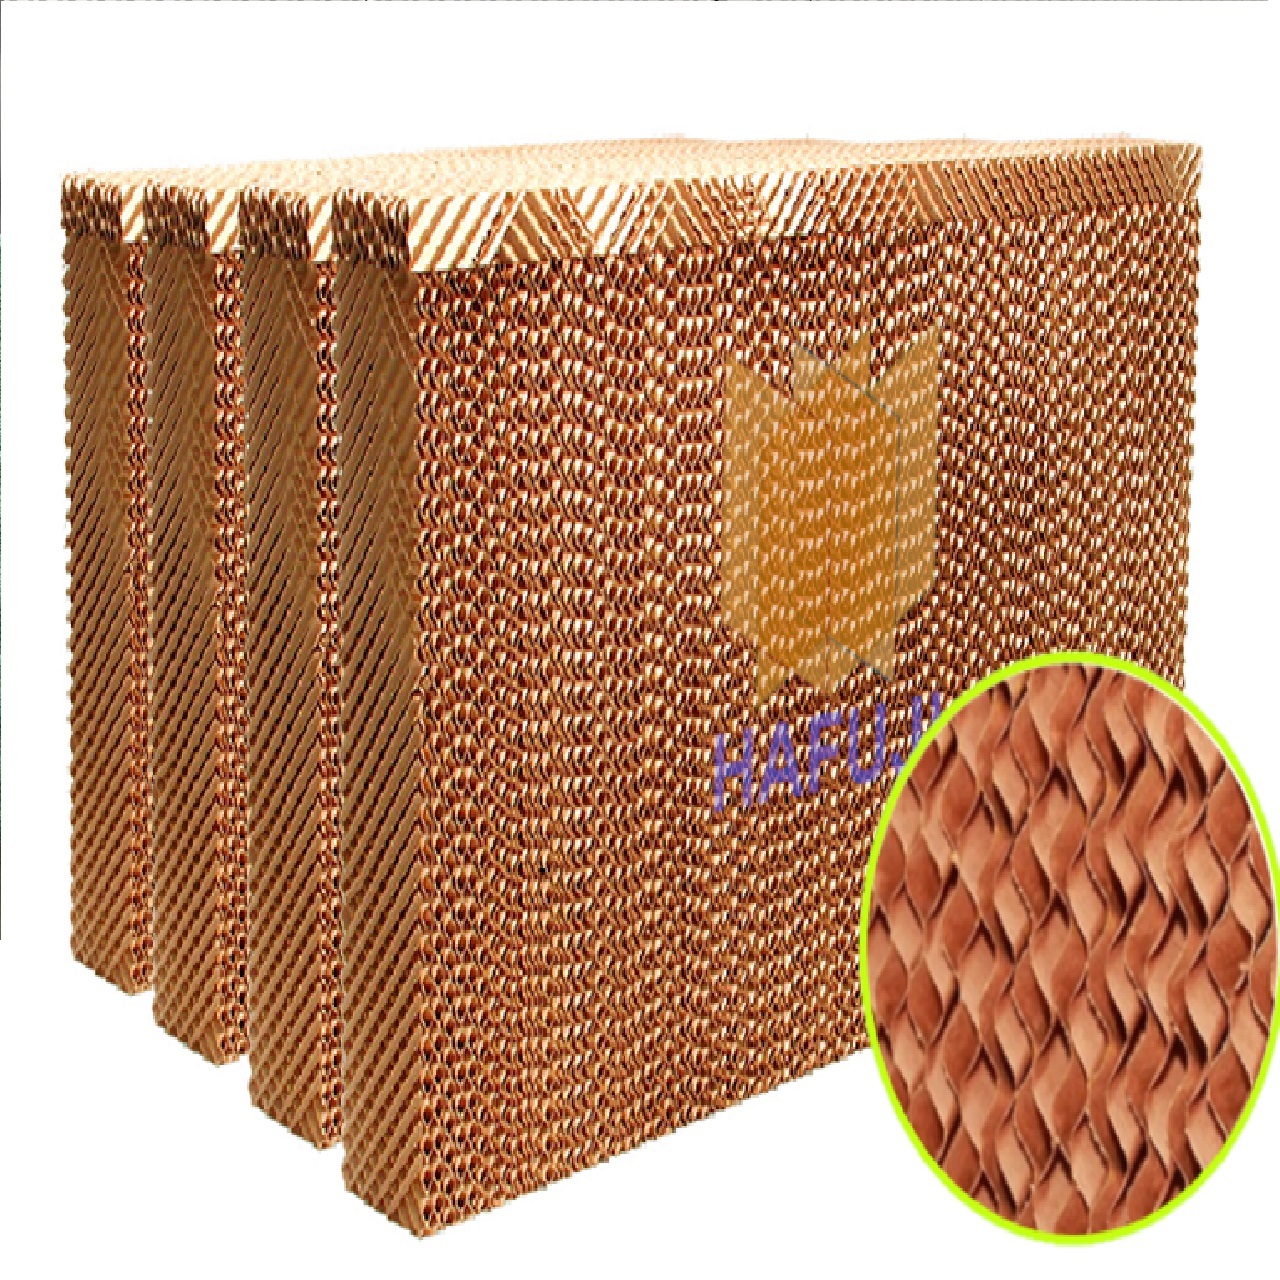 Honeycomb Cooling Pad Wholesaler From Kalyani West Bengal